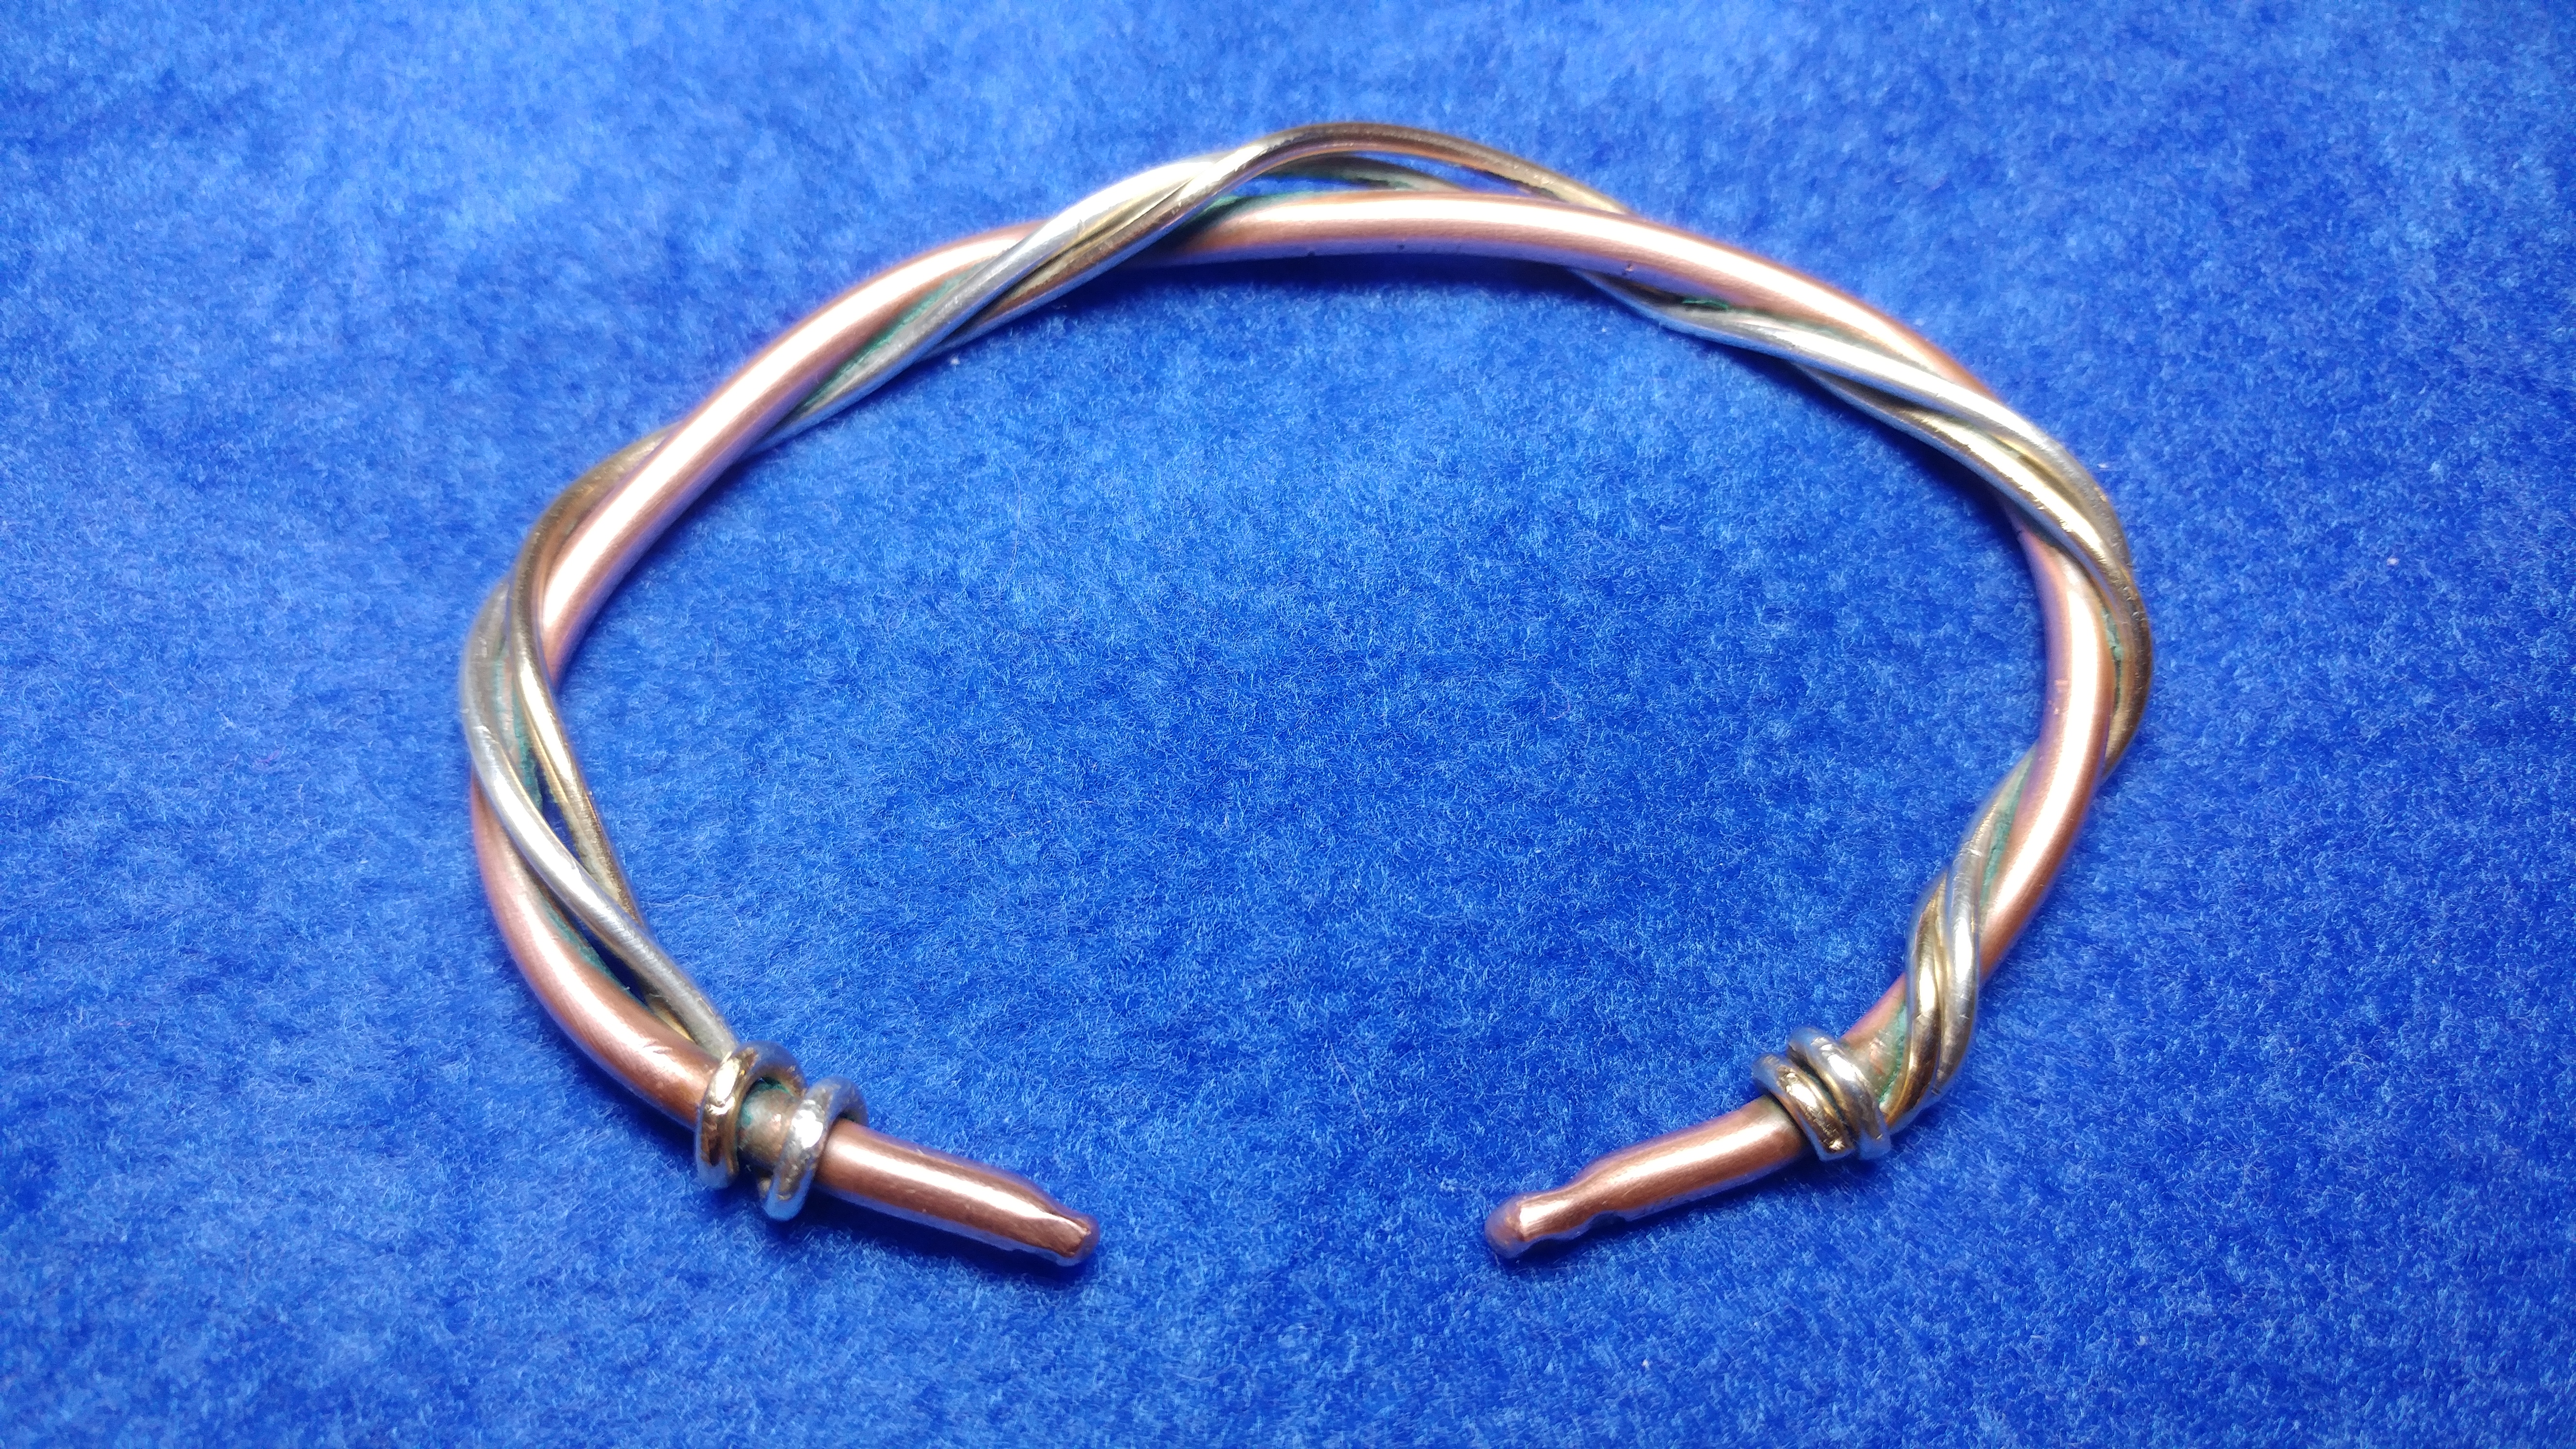 Copper-silver-gold bracelet